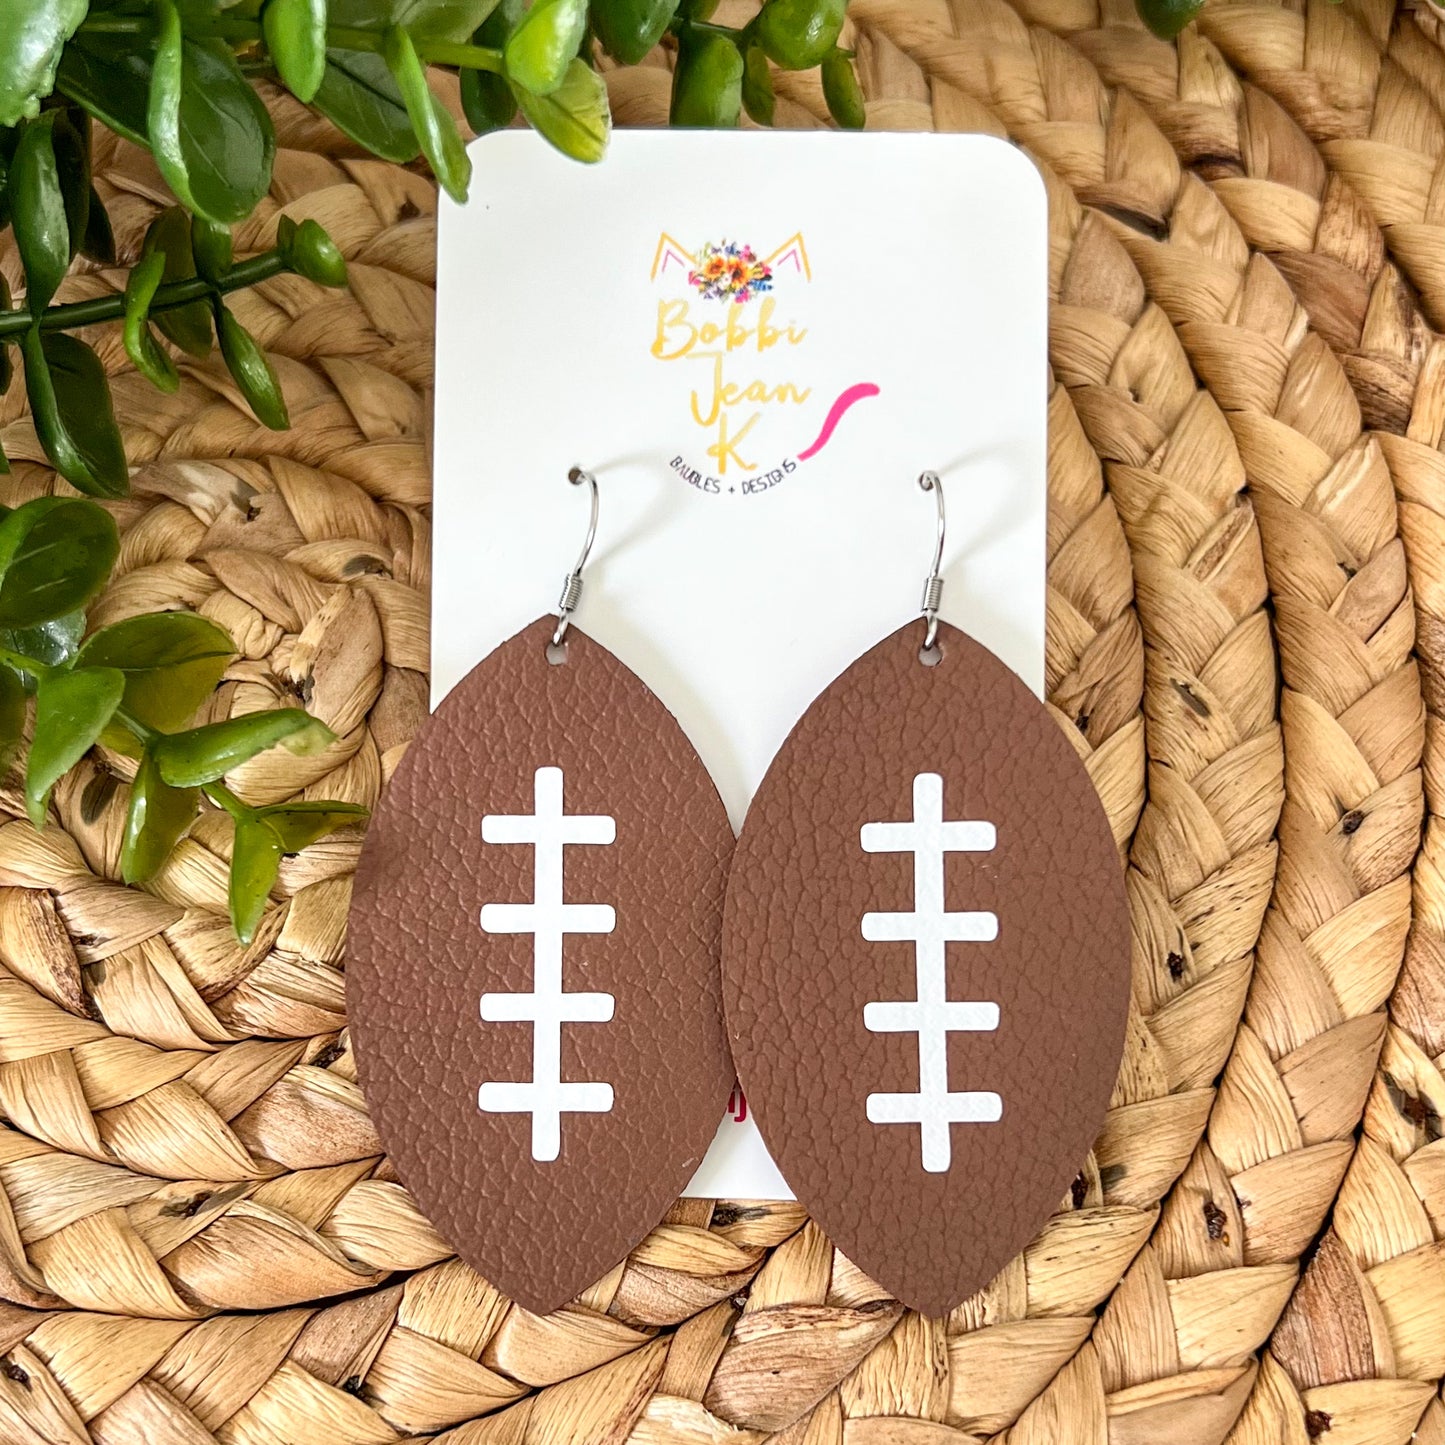 Football Leather Earrings